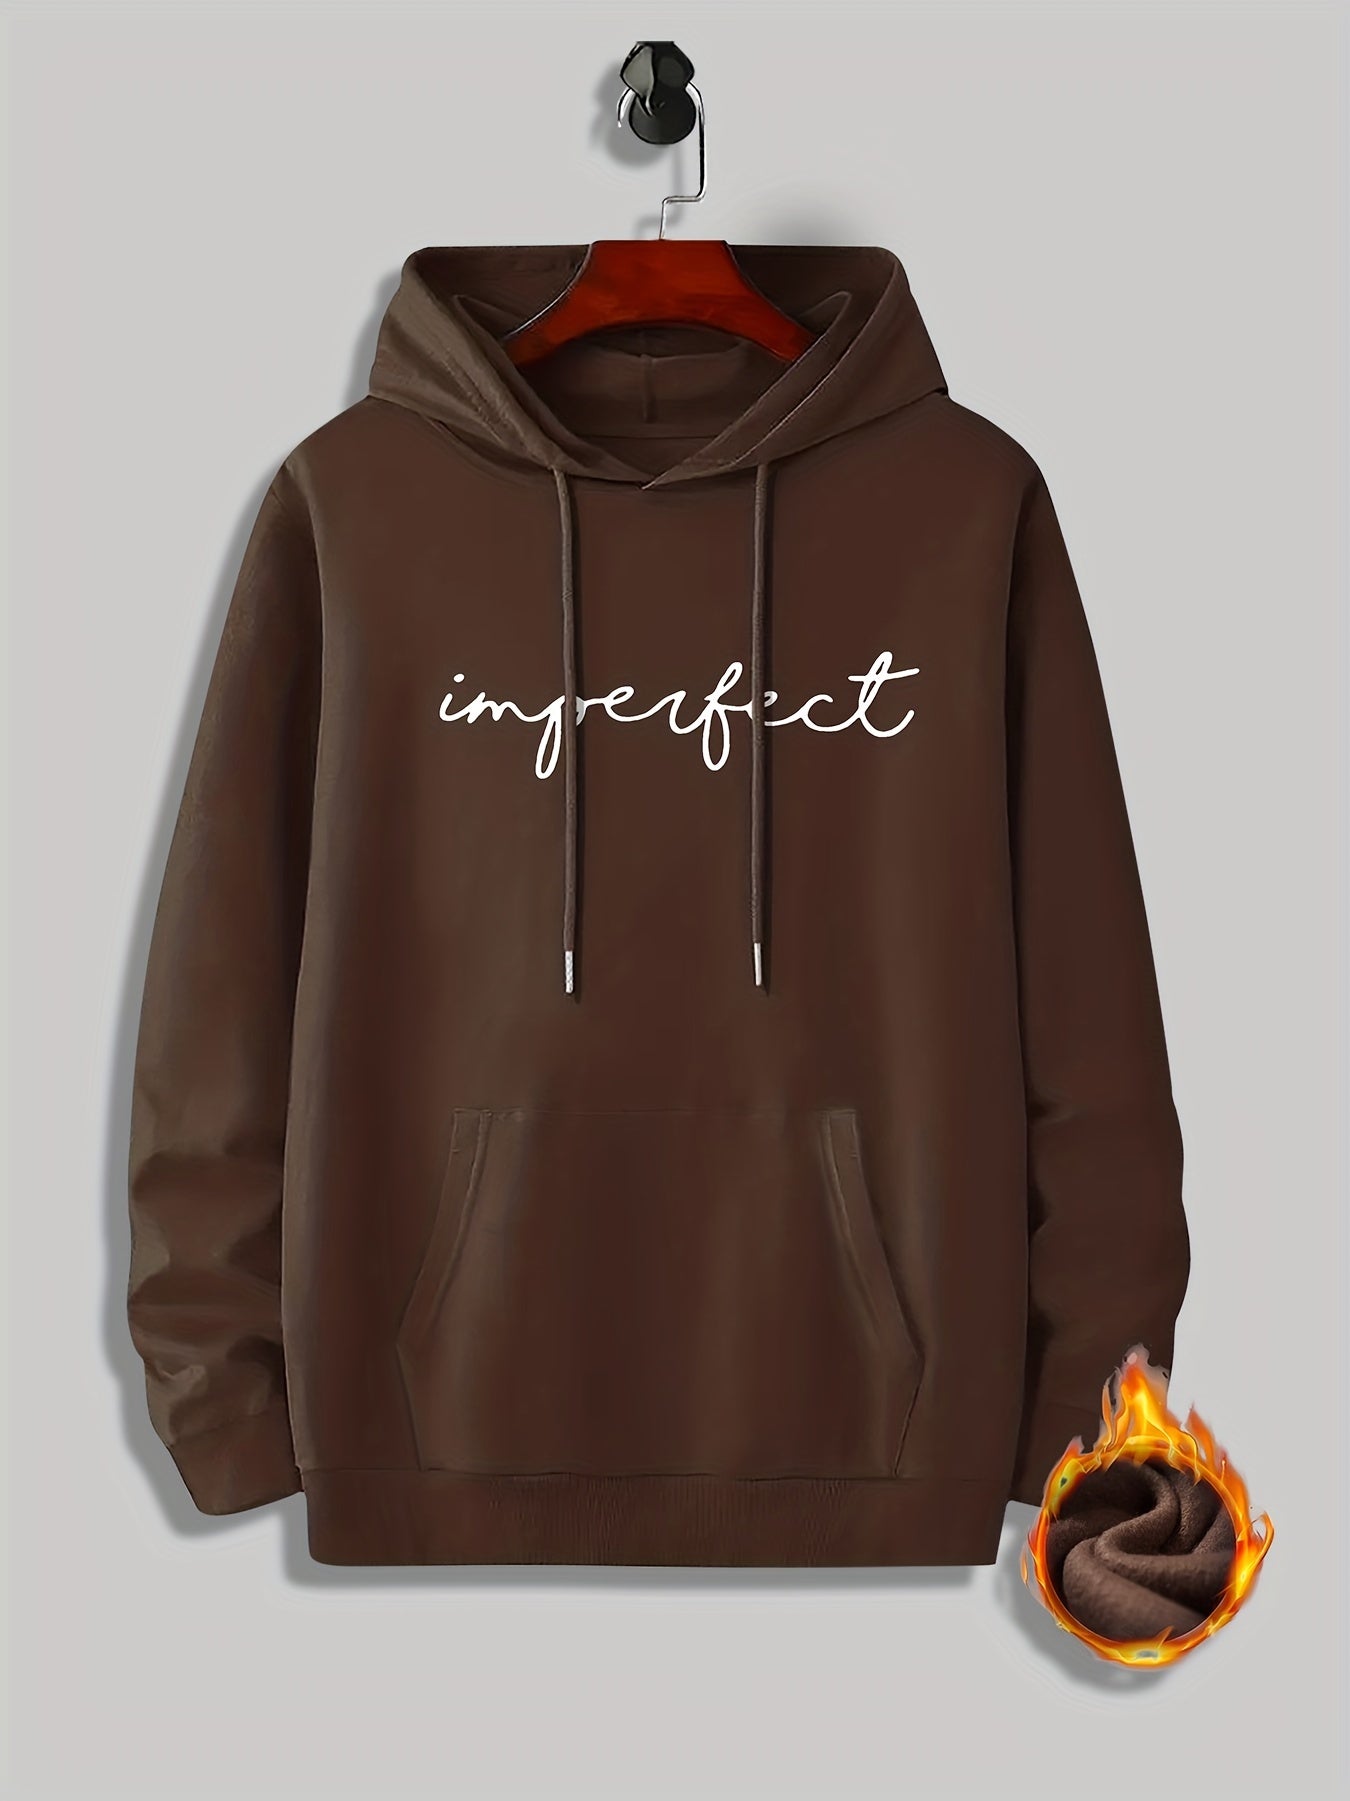 Imperfect Men's Christian Pullover Hooded Sweatshirt claimedbygoddesigns